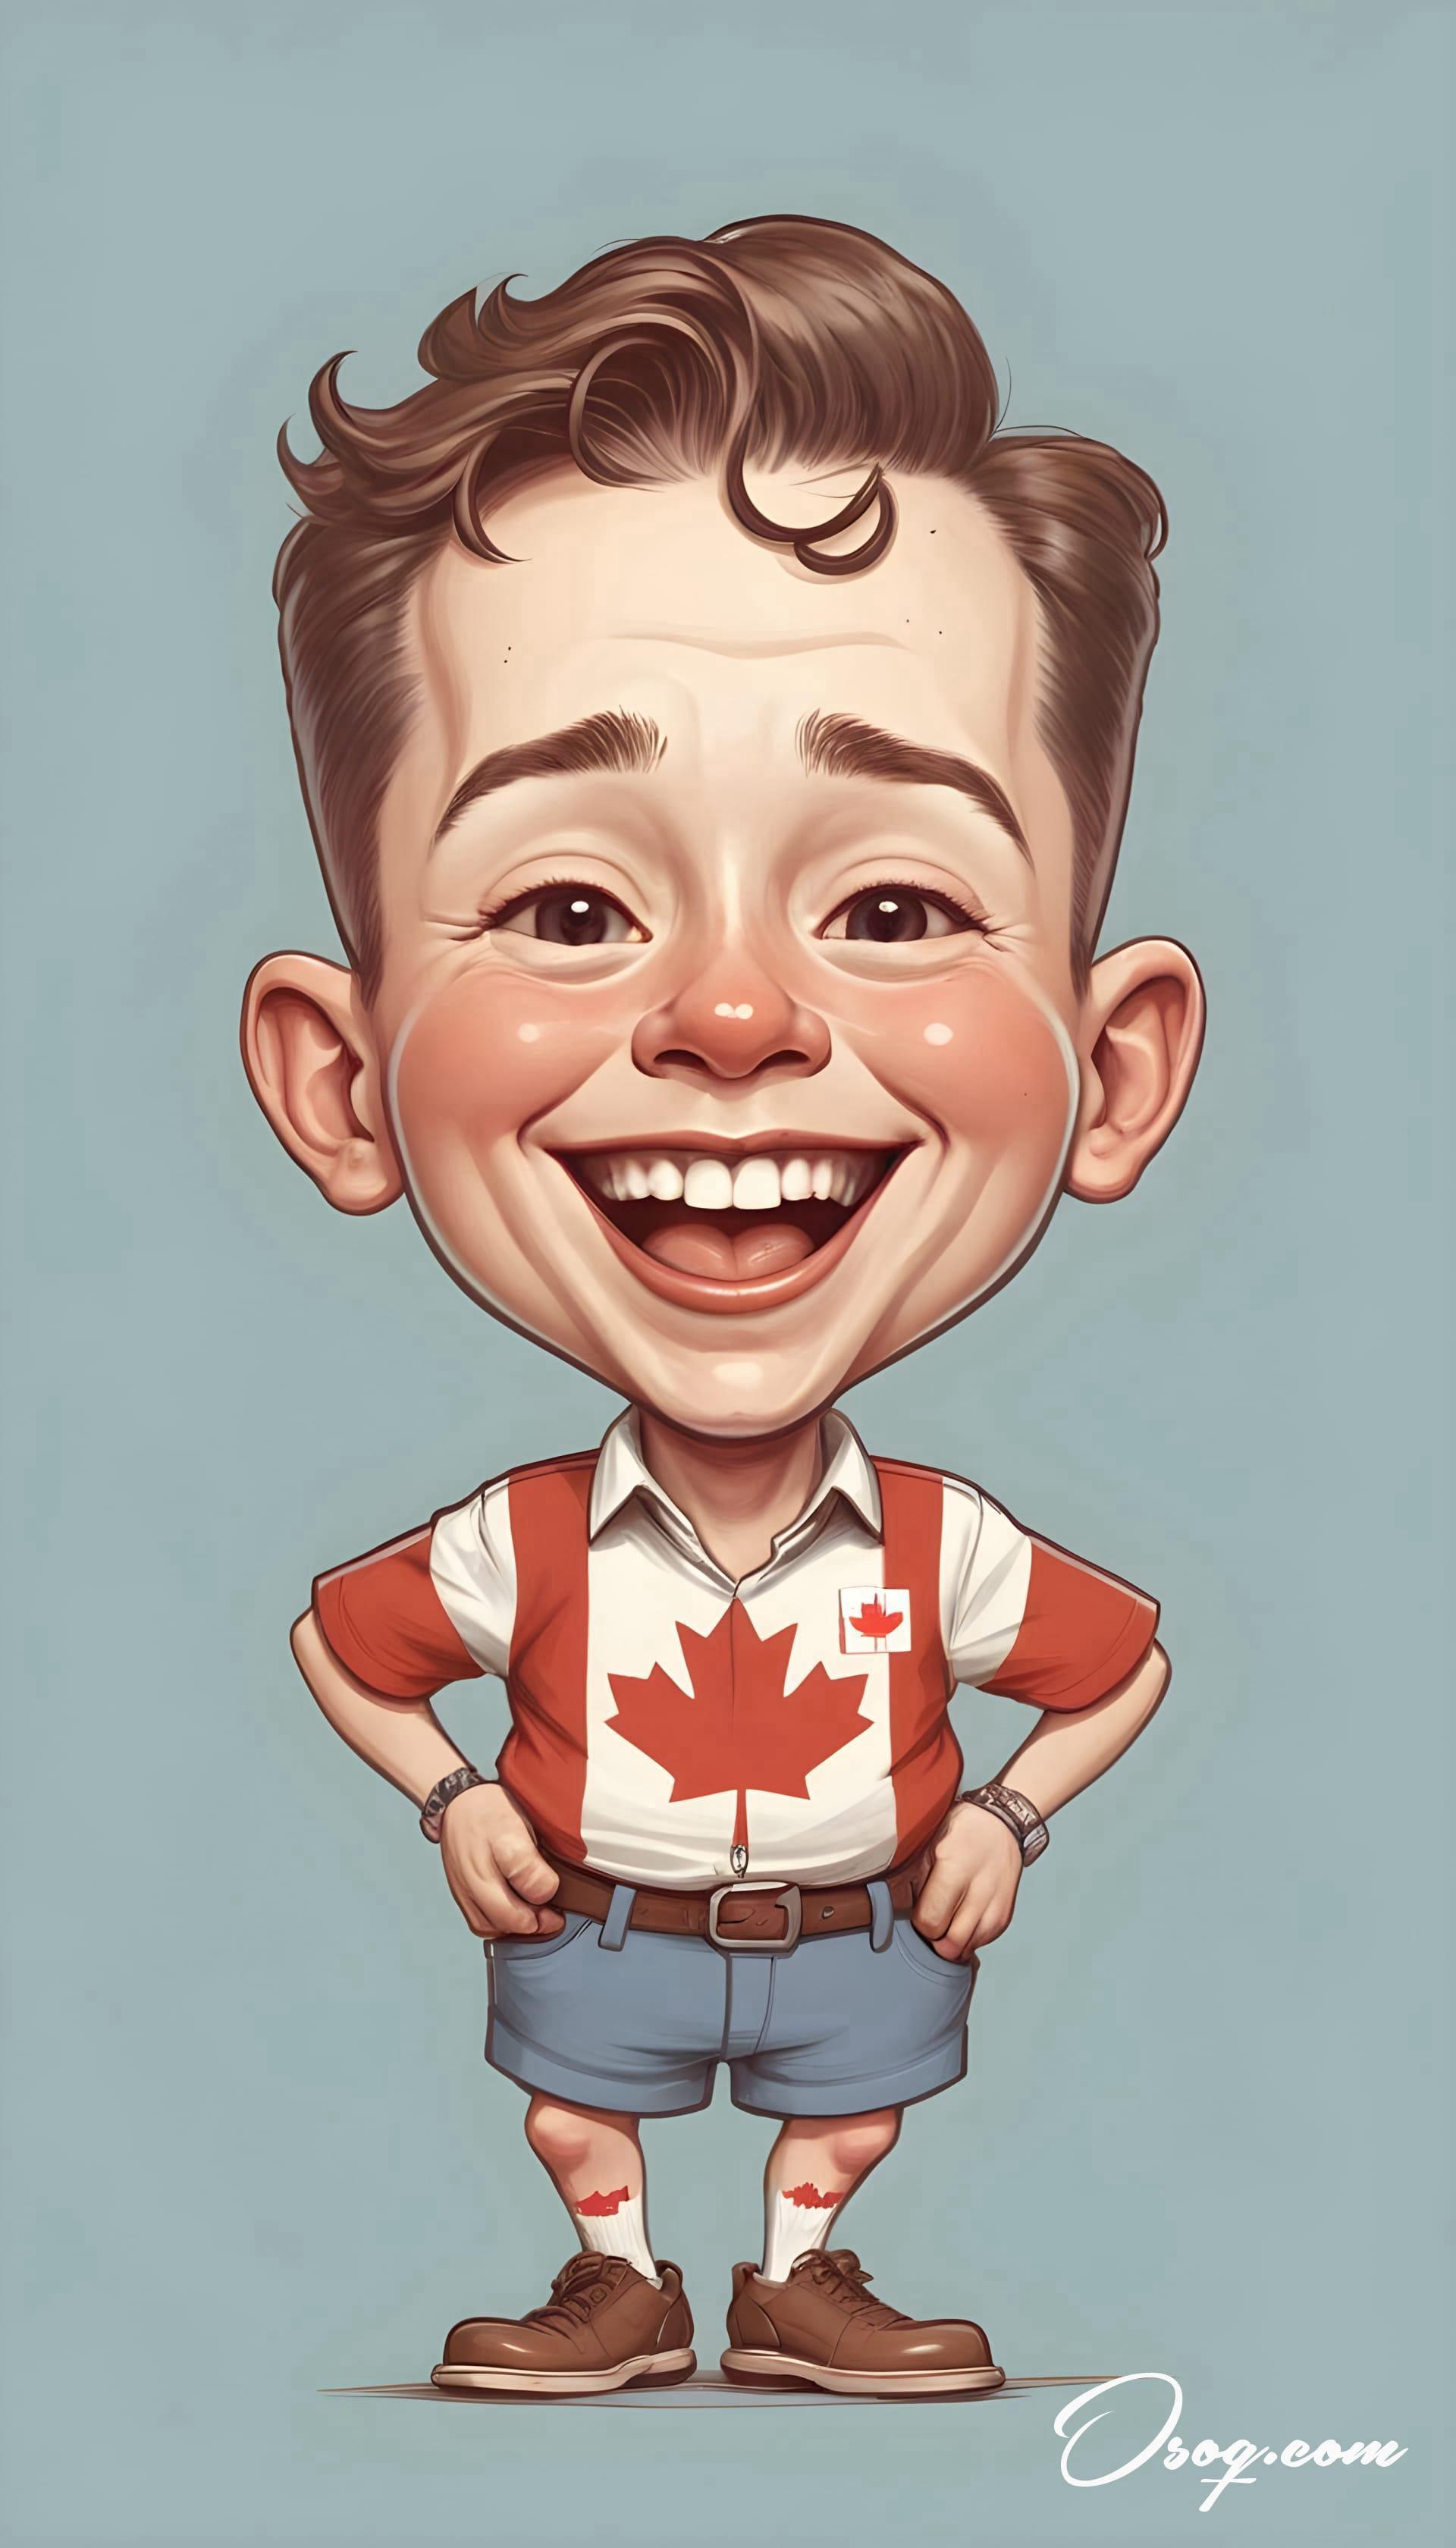 Canadian cartoon 12